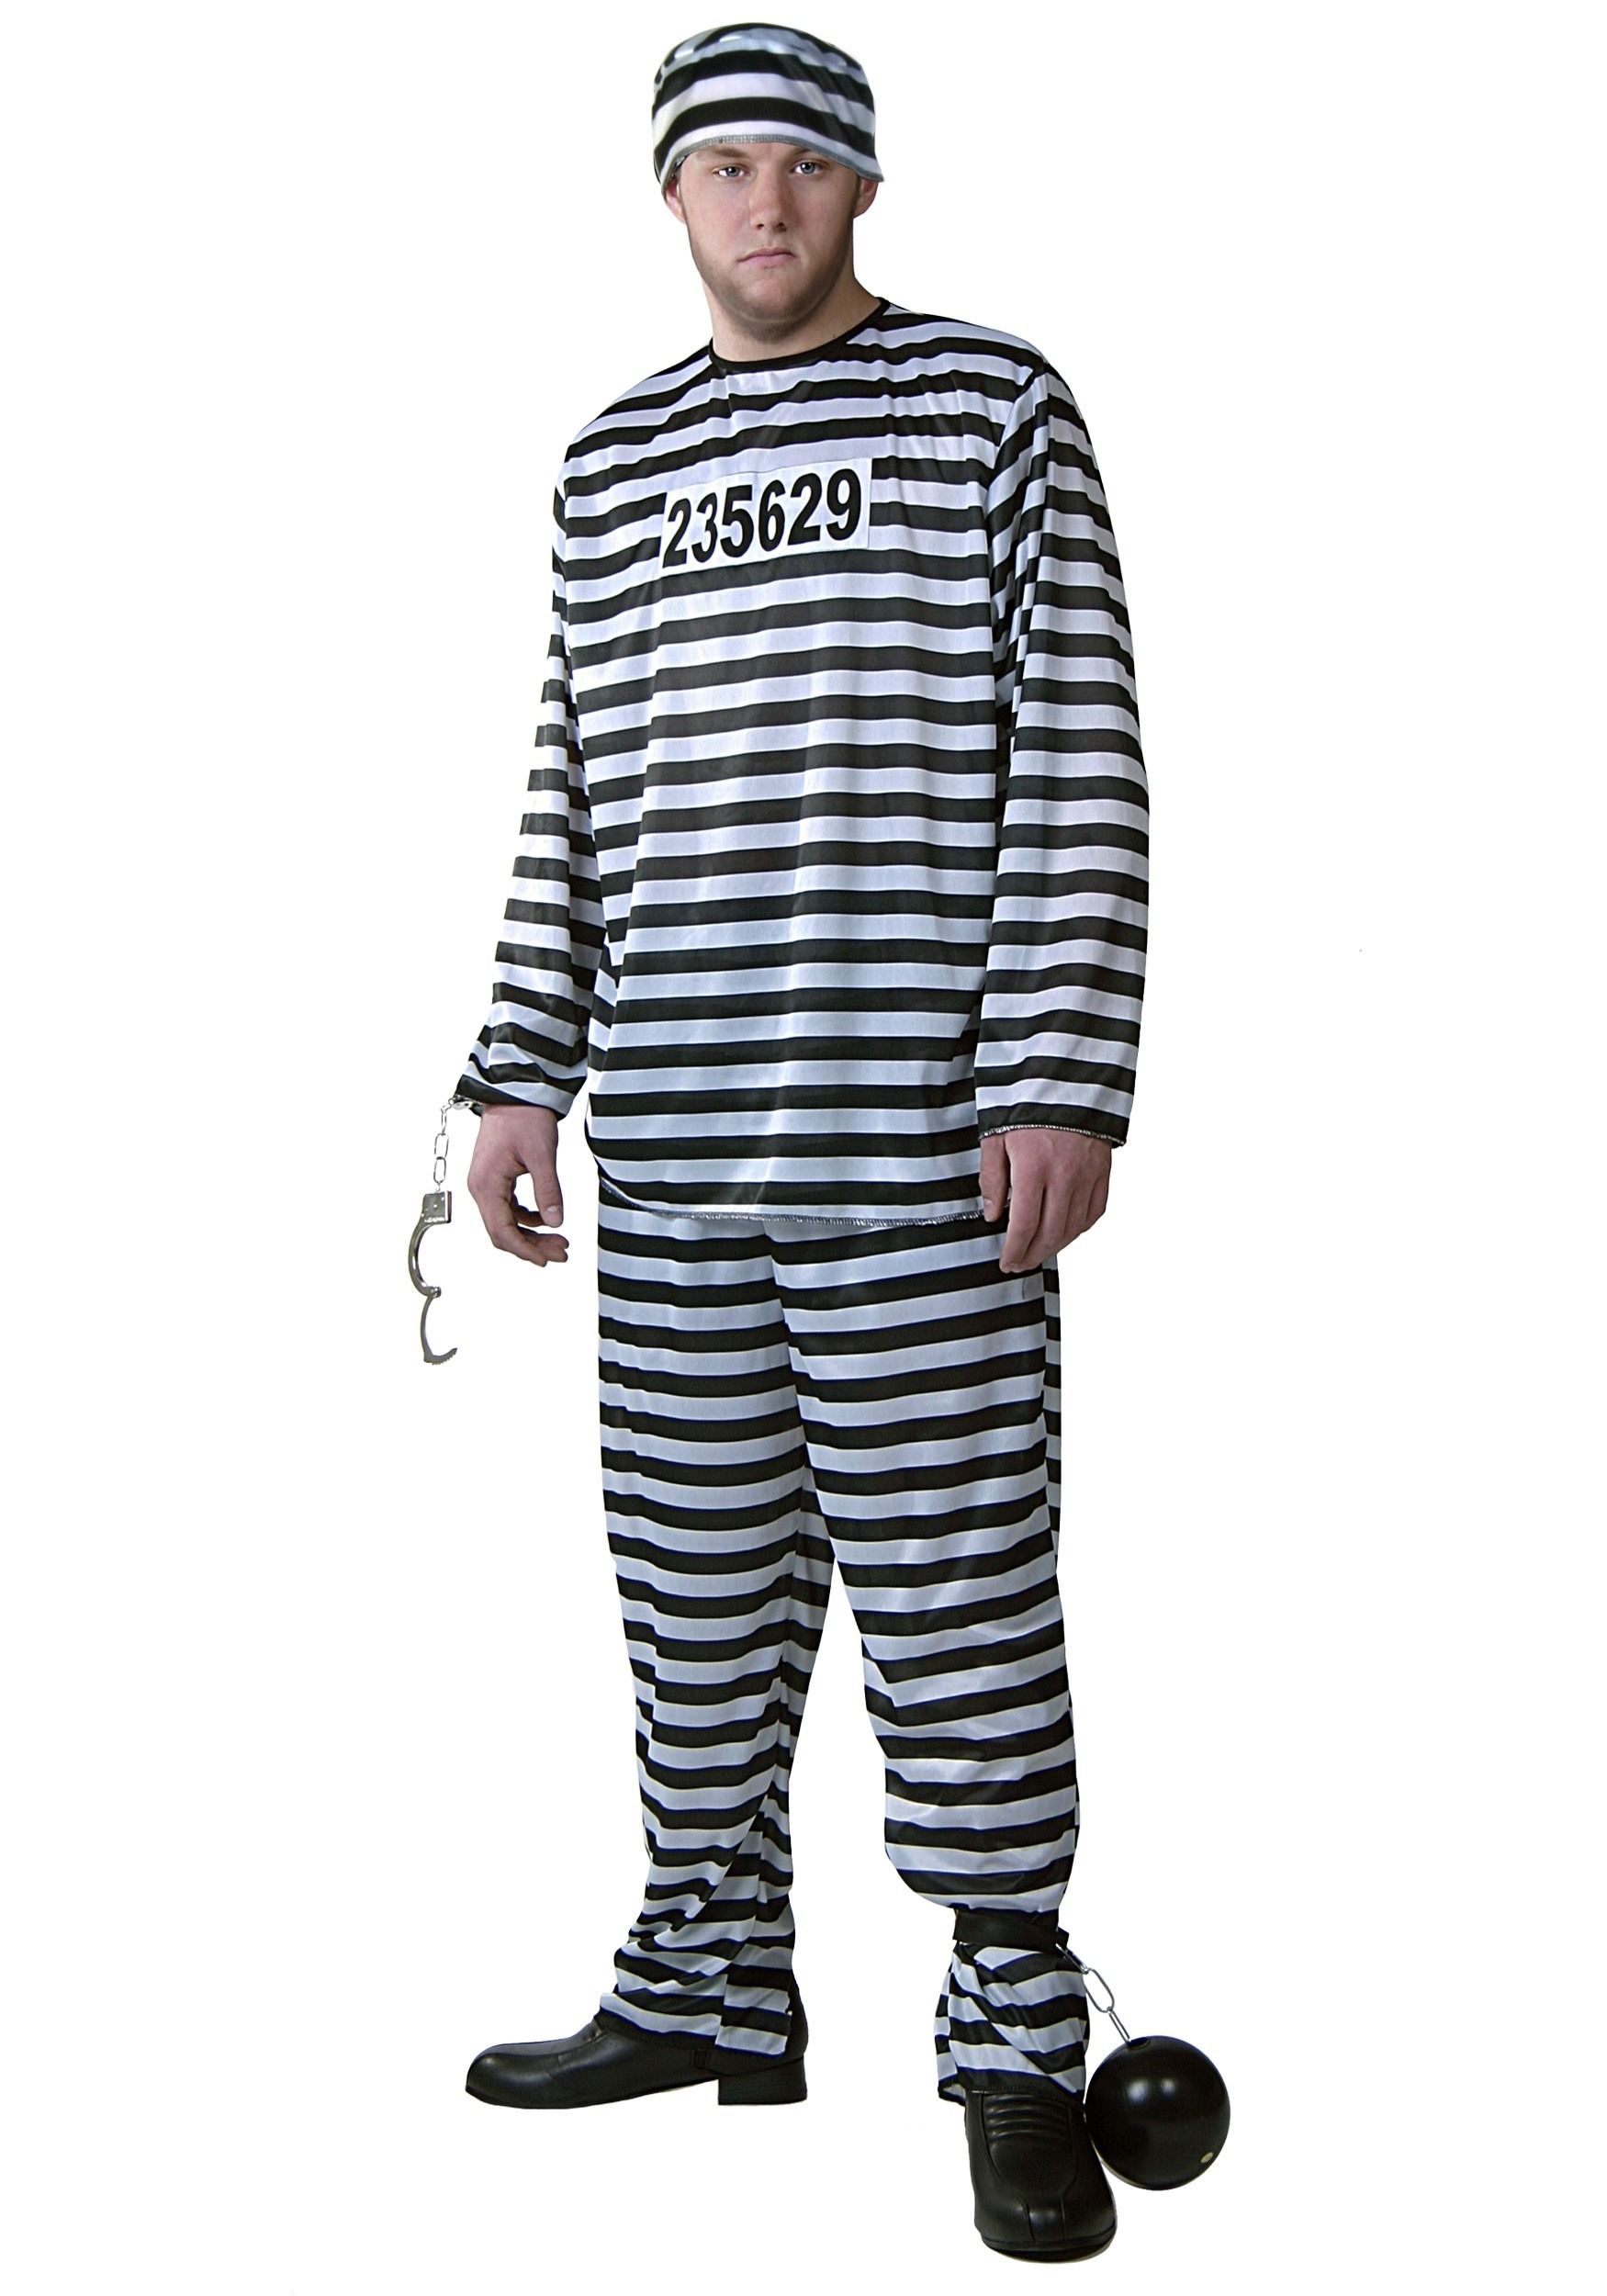 Photos - Fancy Dress FUN Costumes Plus Size Prisoner Costume for Men Black/White FUN2034PL